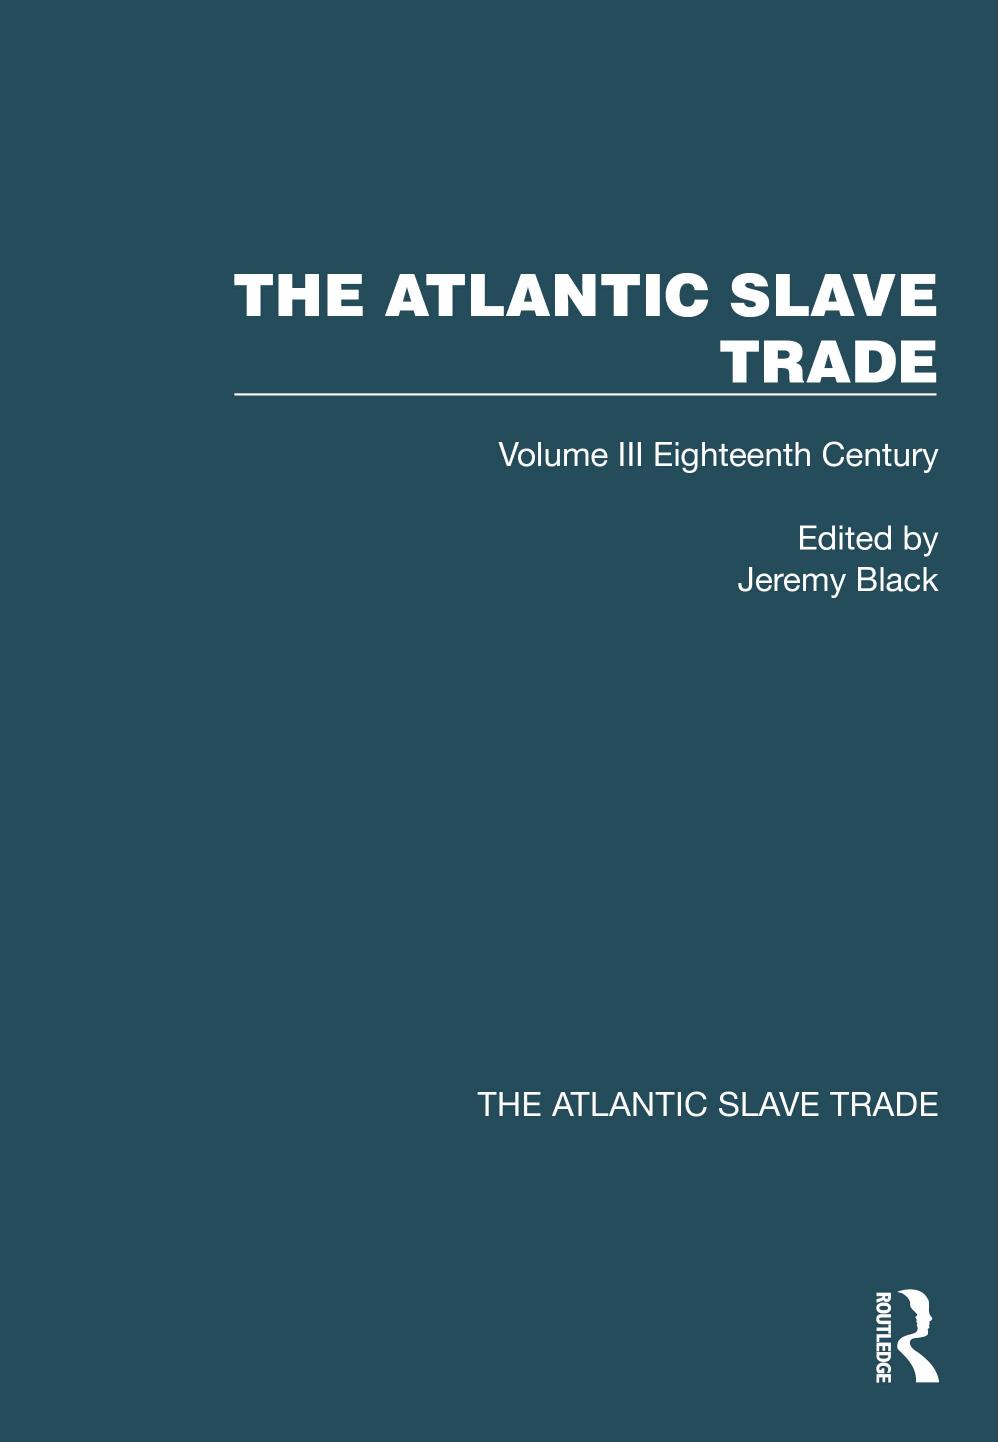 The Atlantic Slave Trade, Volume III: Eighteenth Century by Jeremy Black